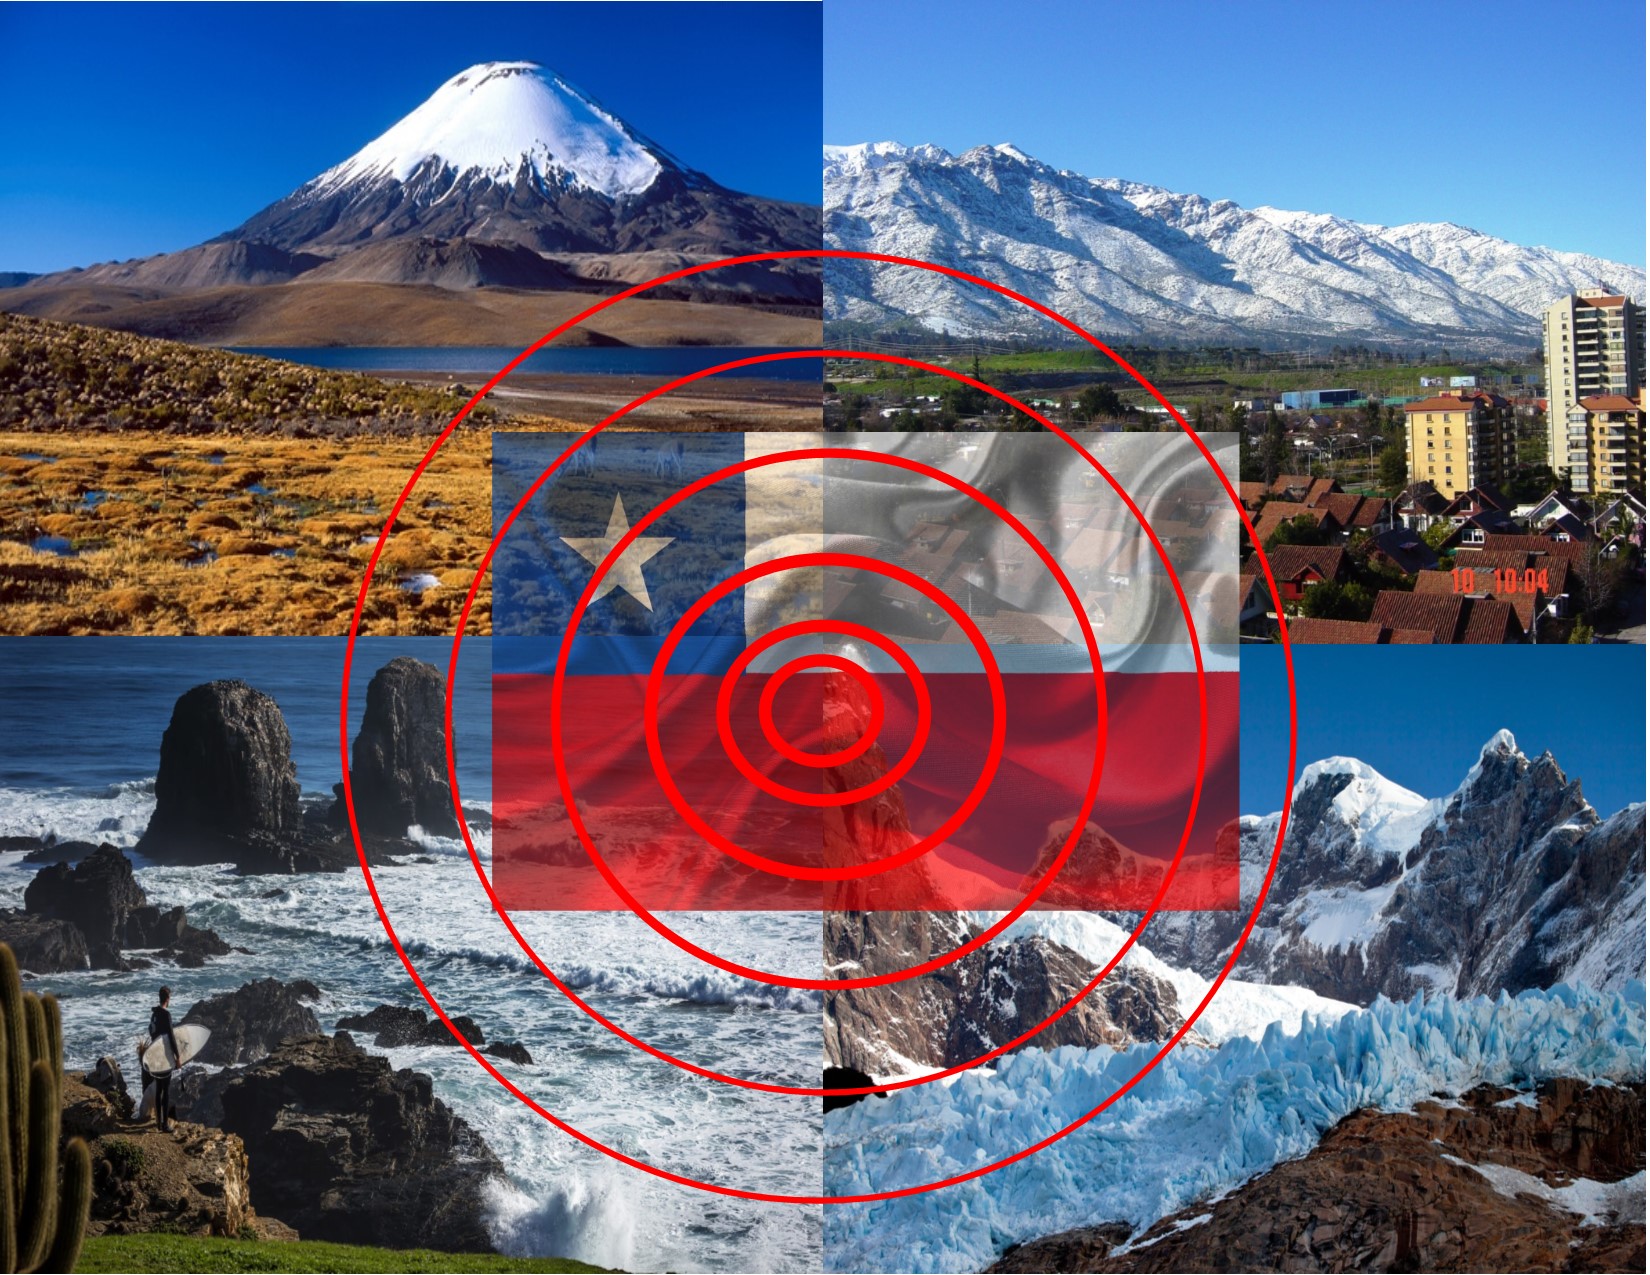 Cultura Sismica en Chile